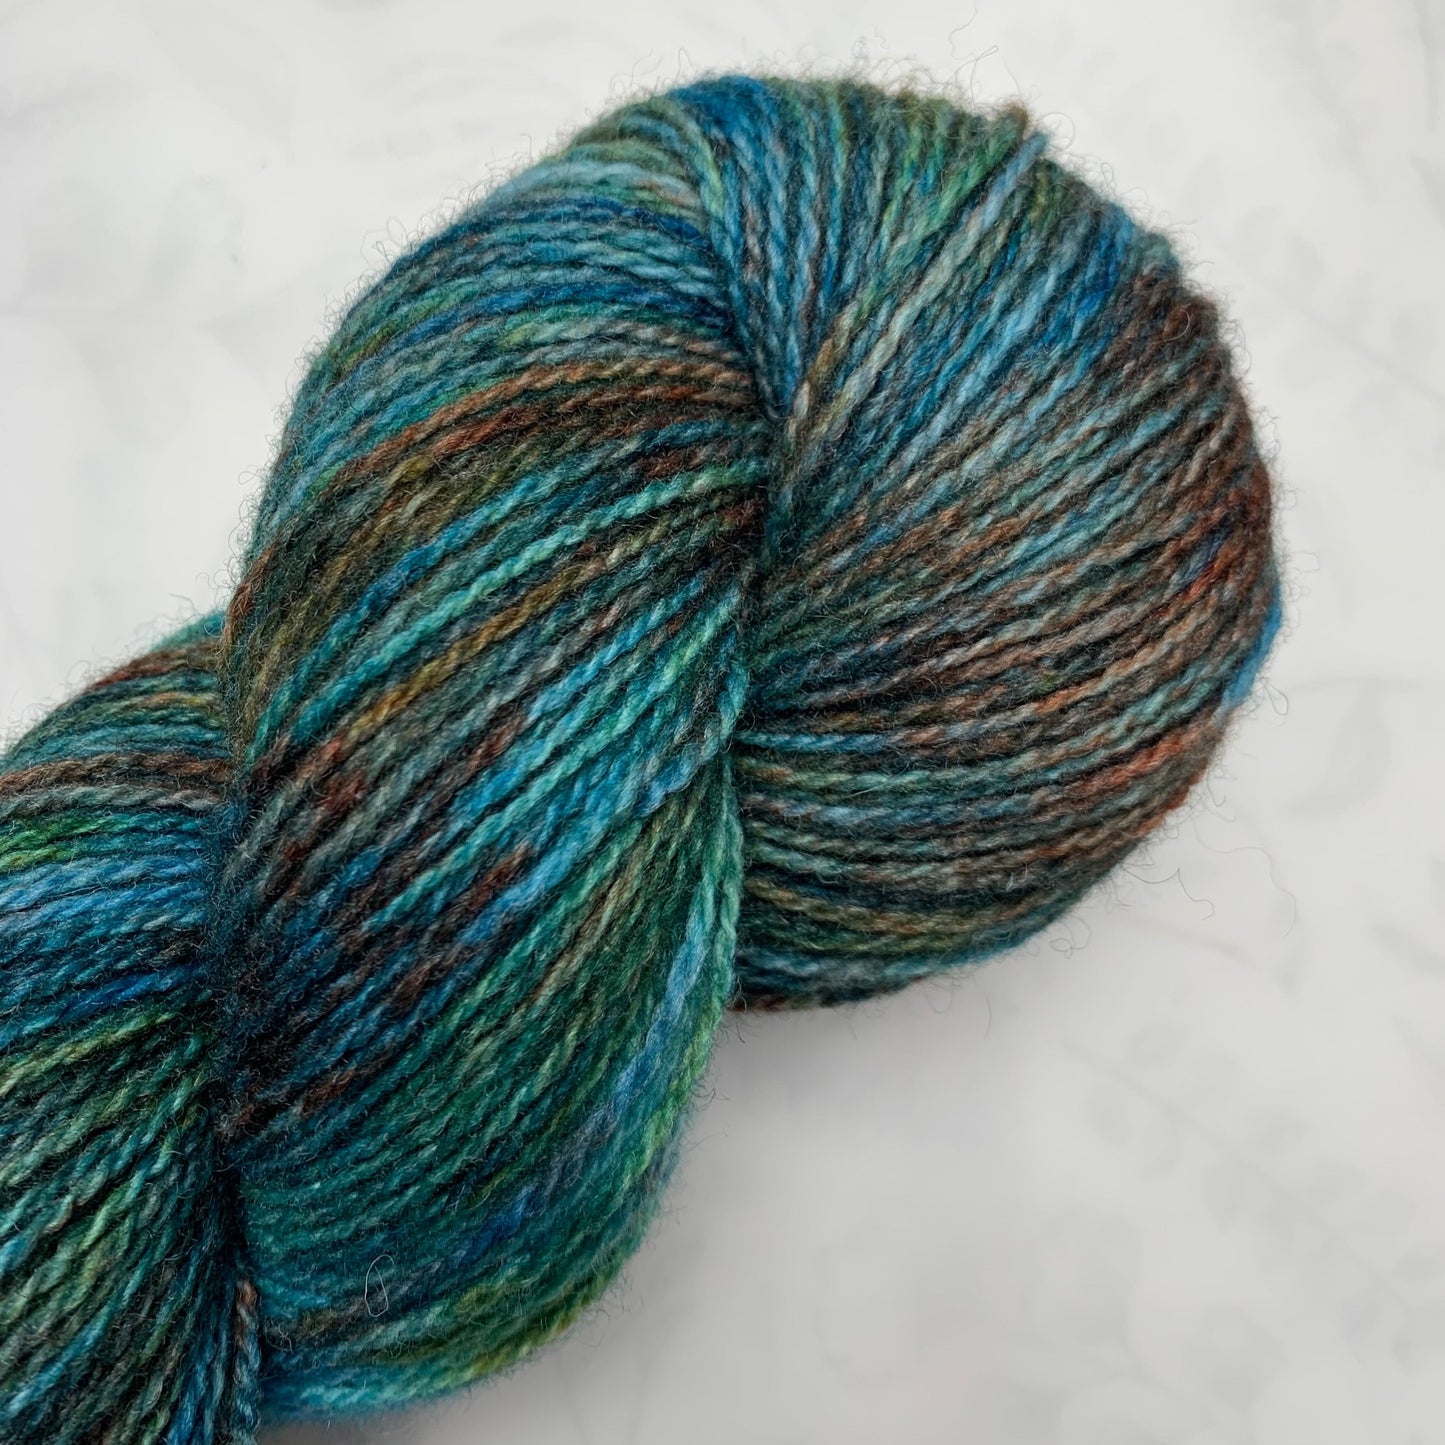 Shipwrecked - Trollfjord sock - Hand Dyed Yarn - Variegated Yarn